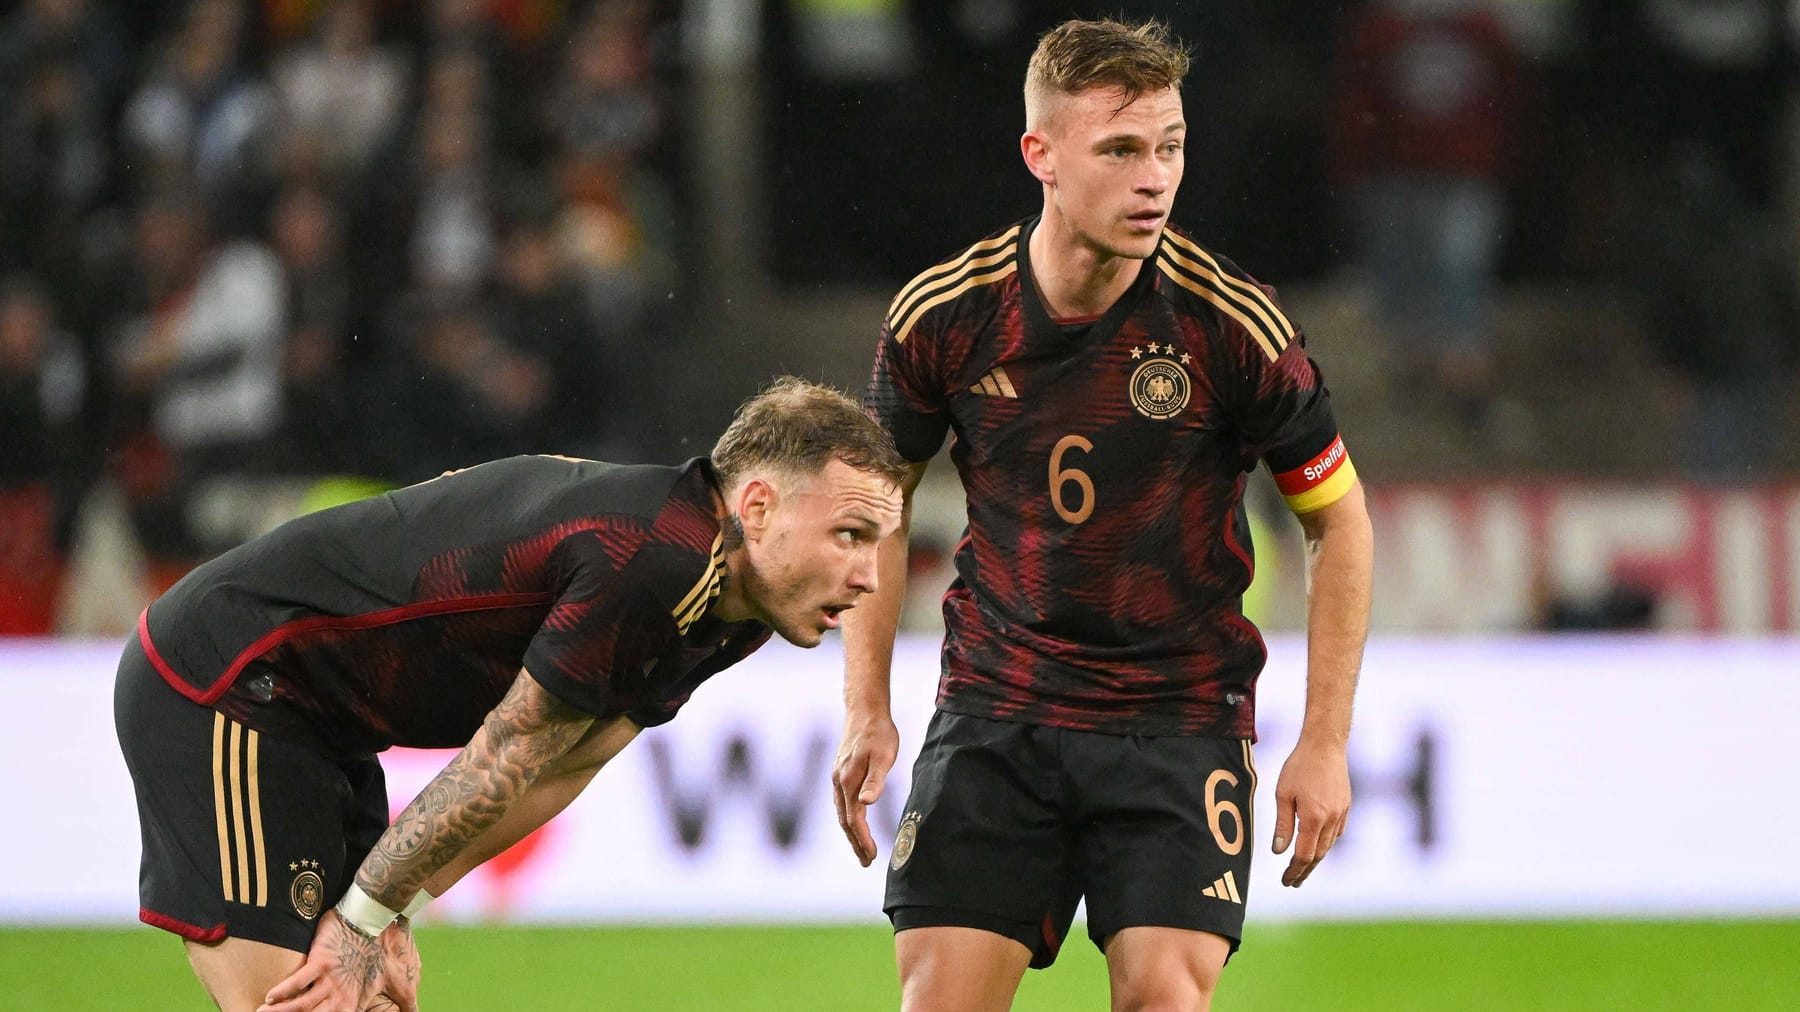 DFB-Elf met bittere nederlaag tegen België